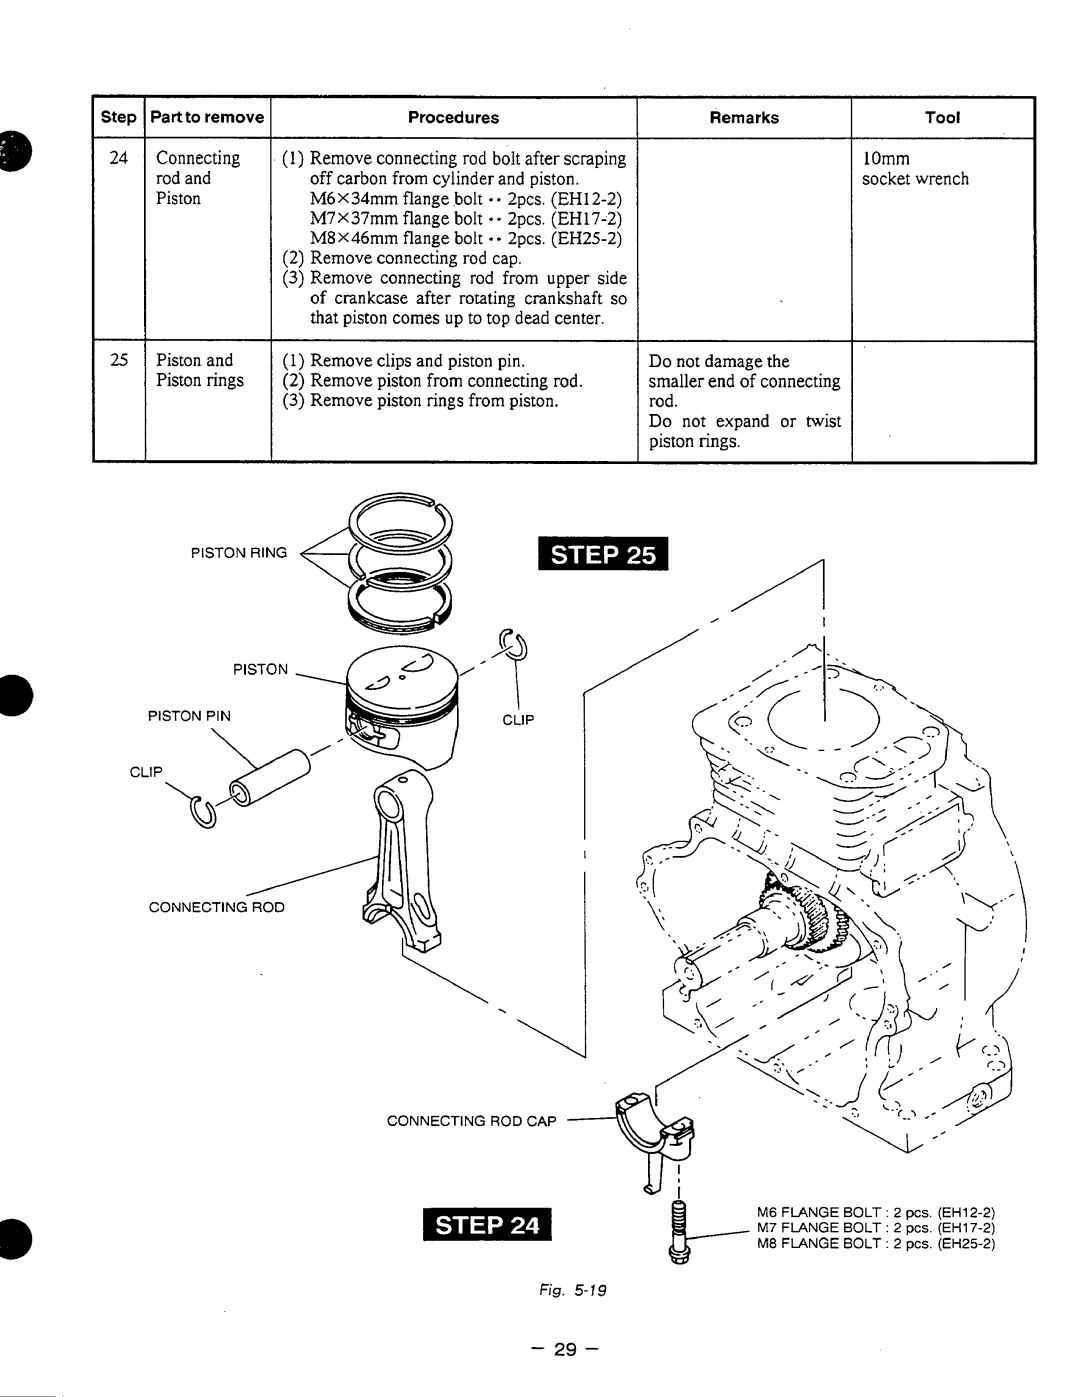 Subaru Robin Power Products EH12-2, EH17-2, EH25-2 manual 